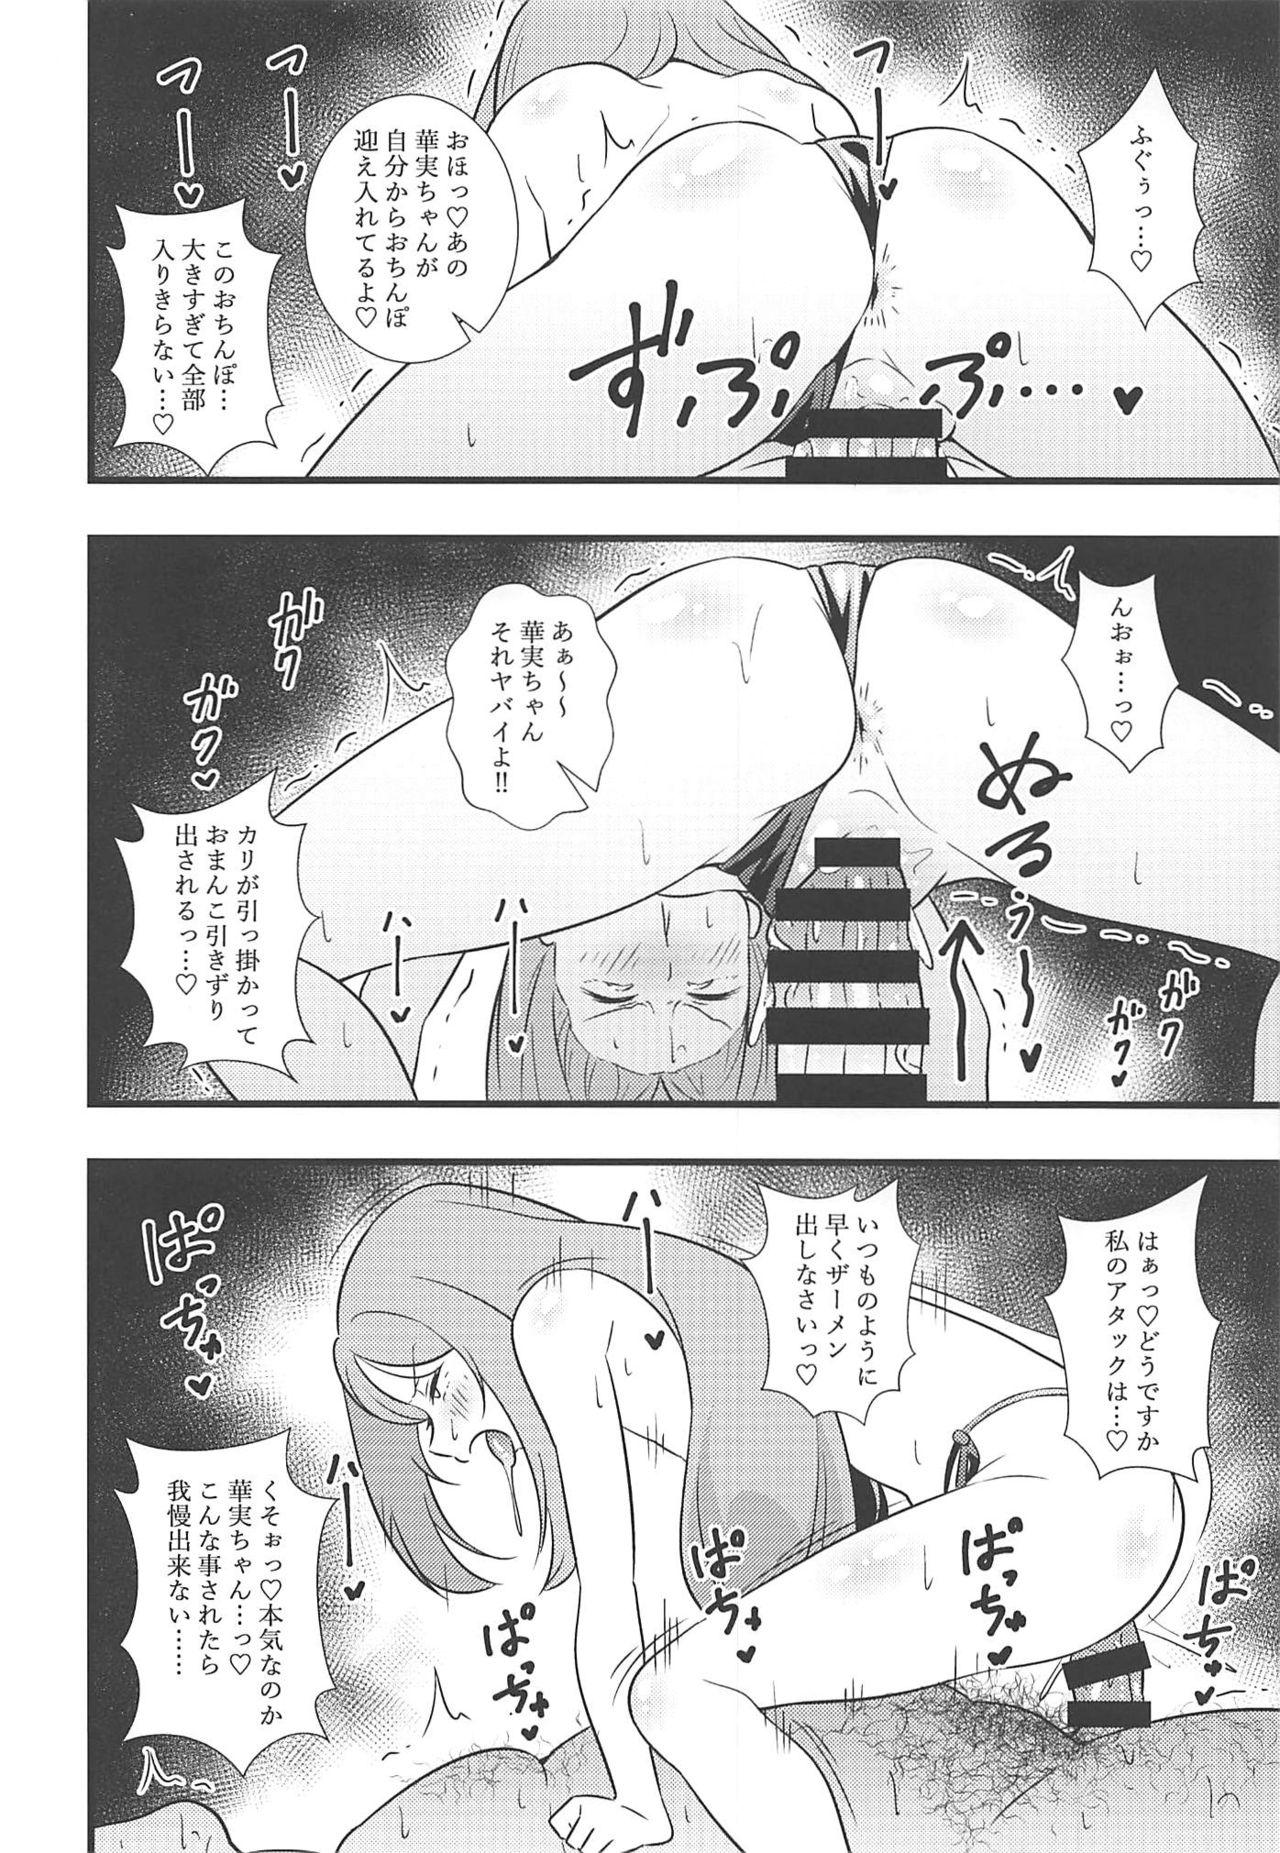 Sapphicerotica Shouten! Harame Ore no Ragna Rock!! Risei ga Buttobu made Tanetsuke Rape - Battle spirits Maid - Page 11